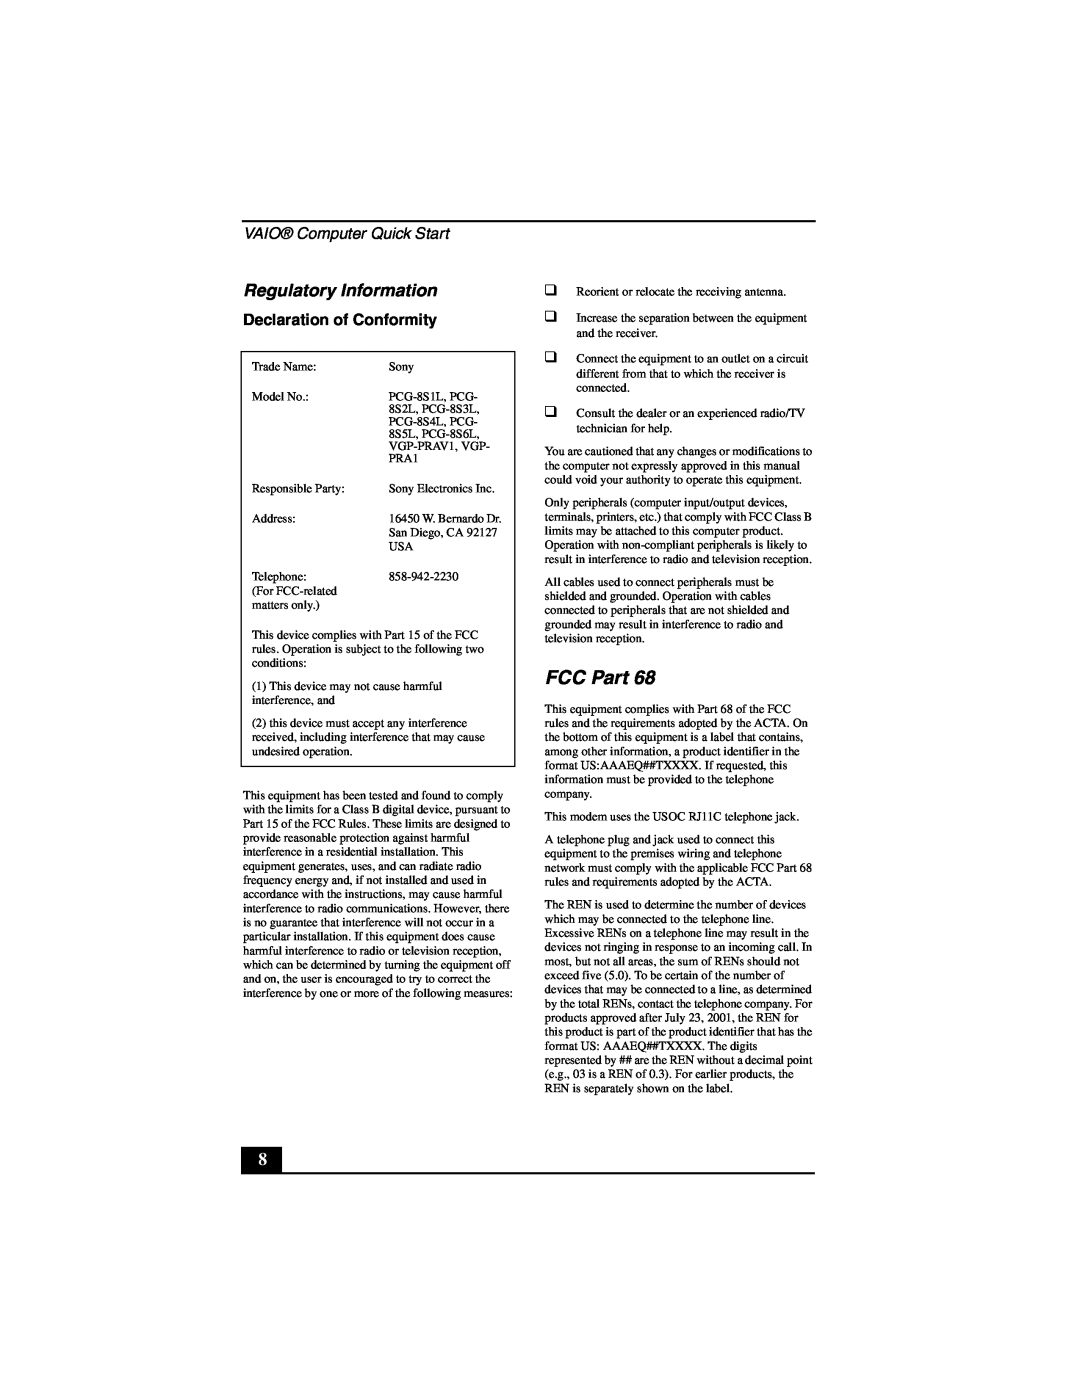 Sony VGN-A600 quick start FCC Part, Regulatory Information, VAIO Computer Quick Start, Declaration of Conformity 